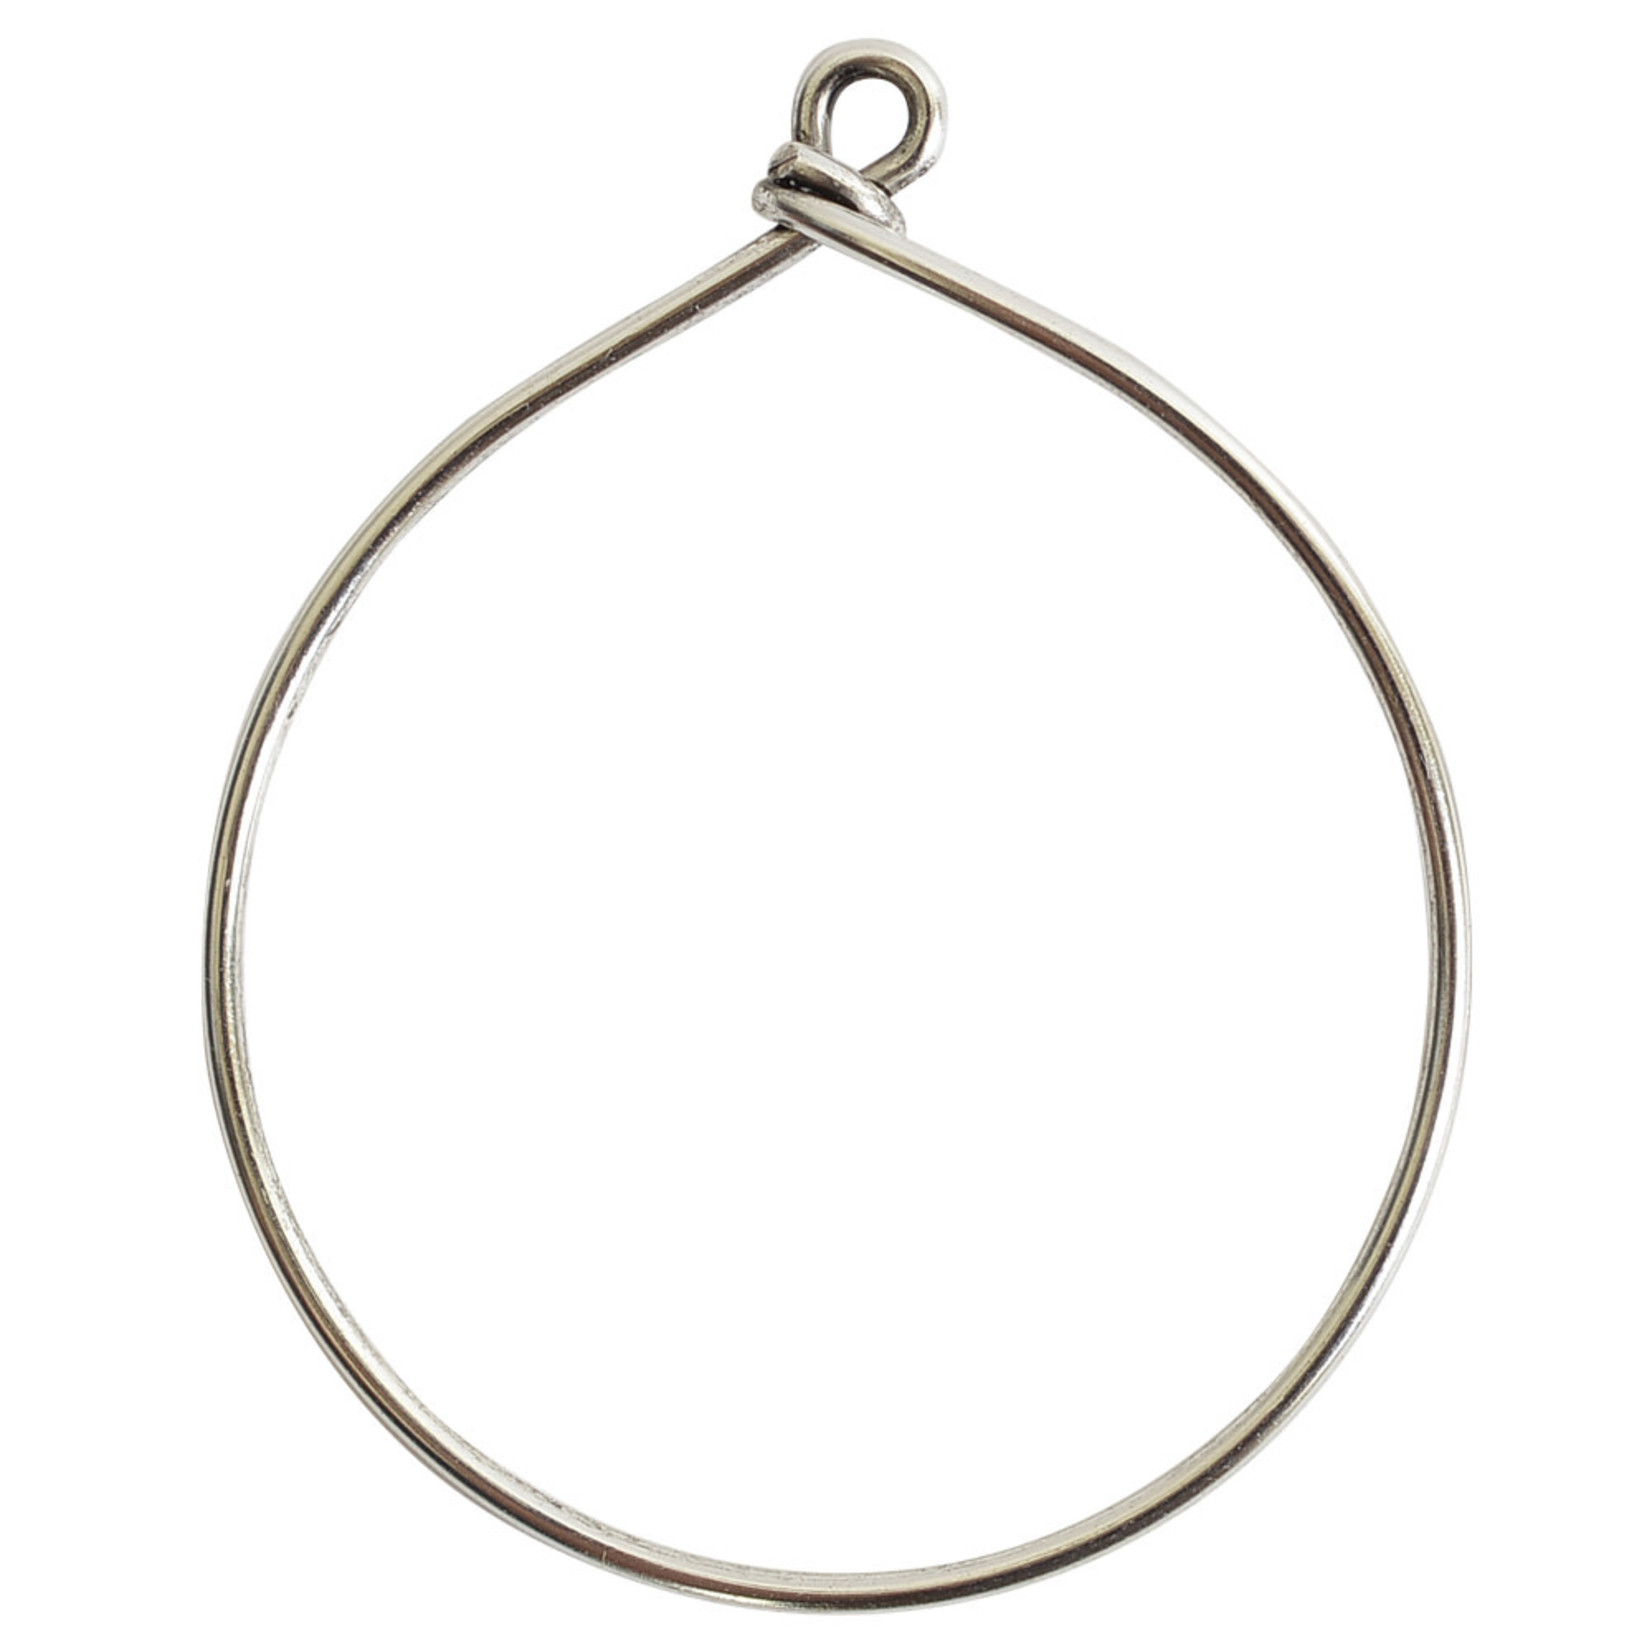 Nunn Design Nunn Design Silver Plated Wire Frame Hoop